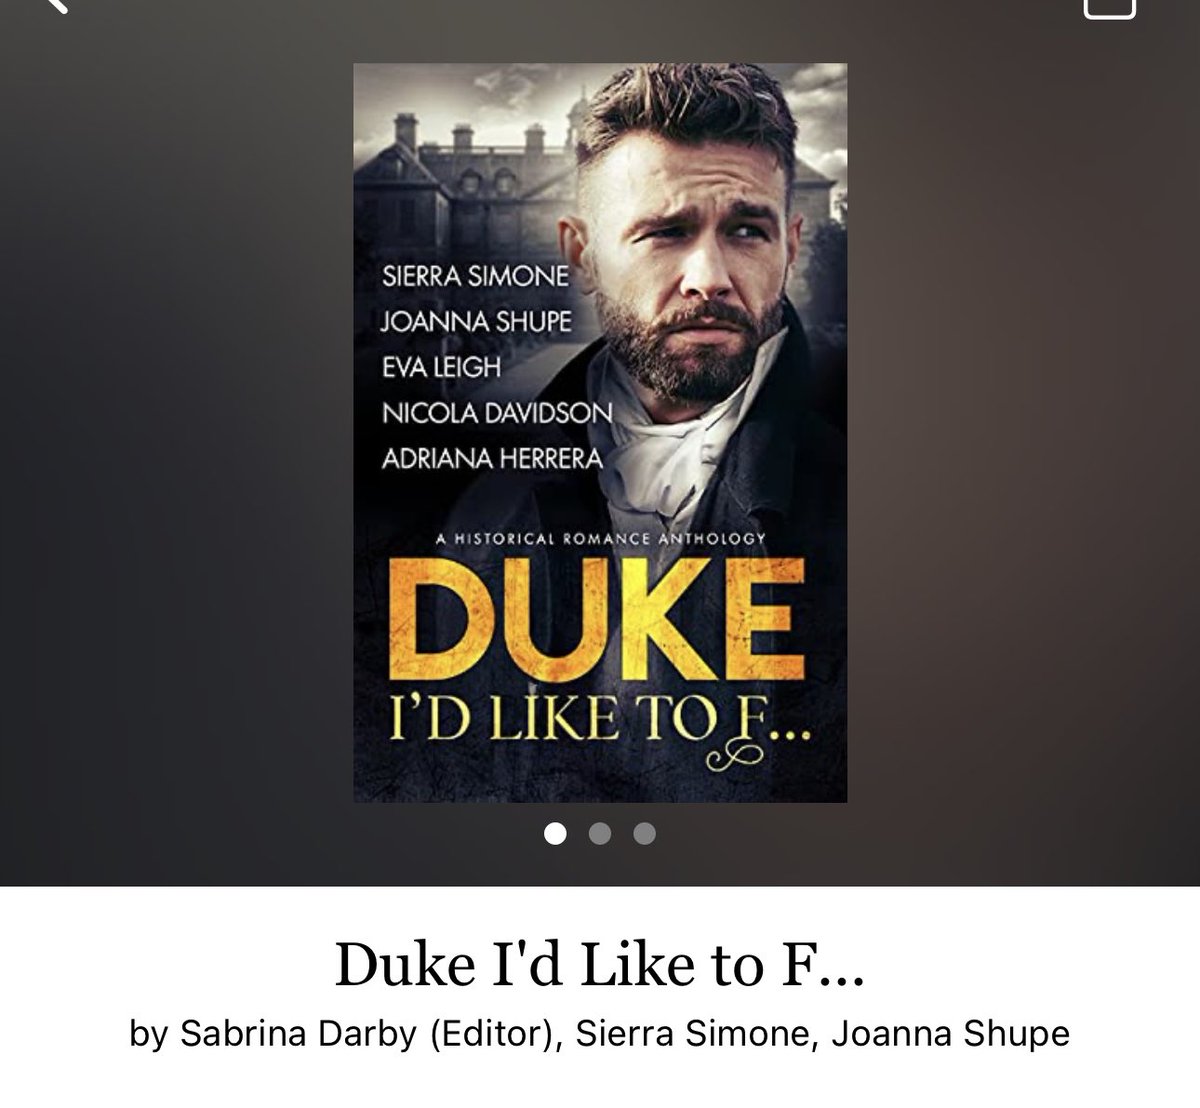 Duke I'd Like To F.... by Sierra Simone 

#DukeIdLikeToF by #SierraSimone #5019 #584pages #562of400 #kindle #Novellas #24for6 #FPL #5Novellas #June2023 #clearingoffreadingshelves #whatsnext #readiitquick